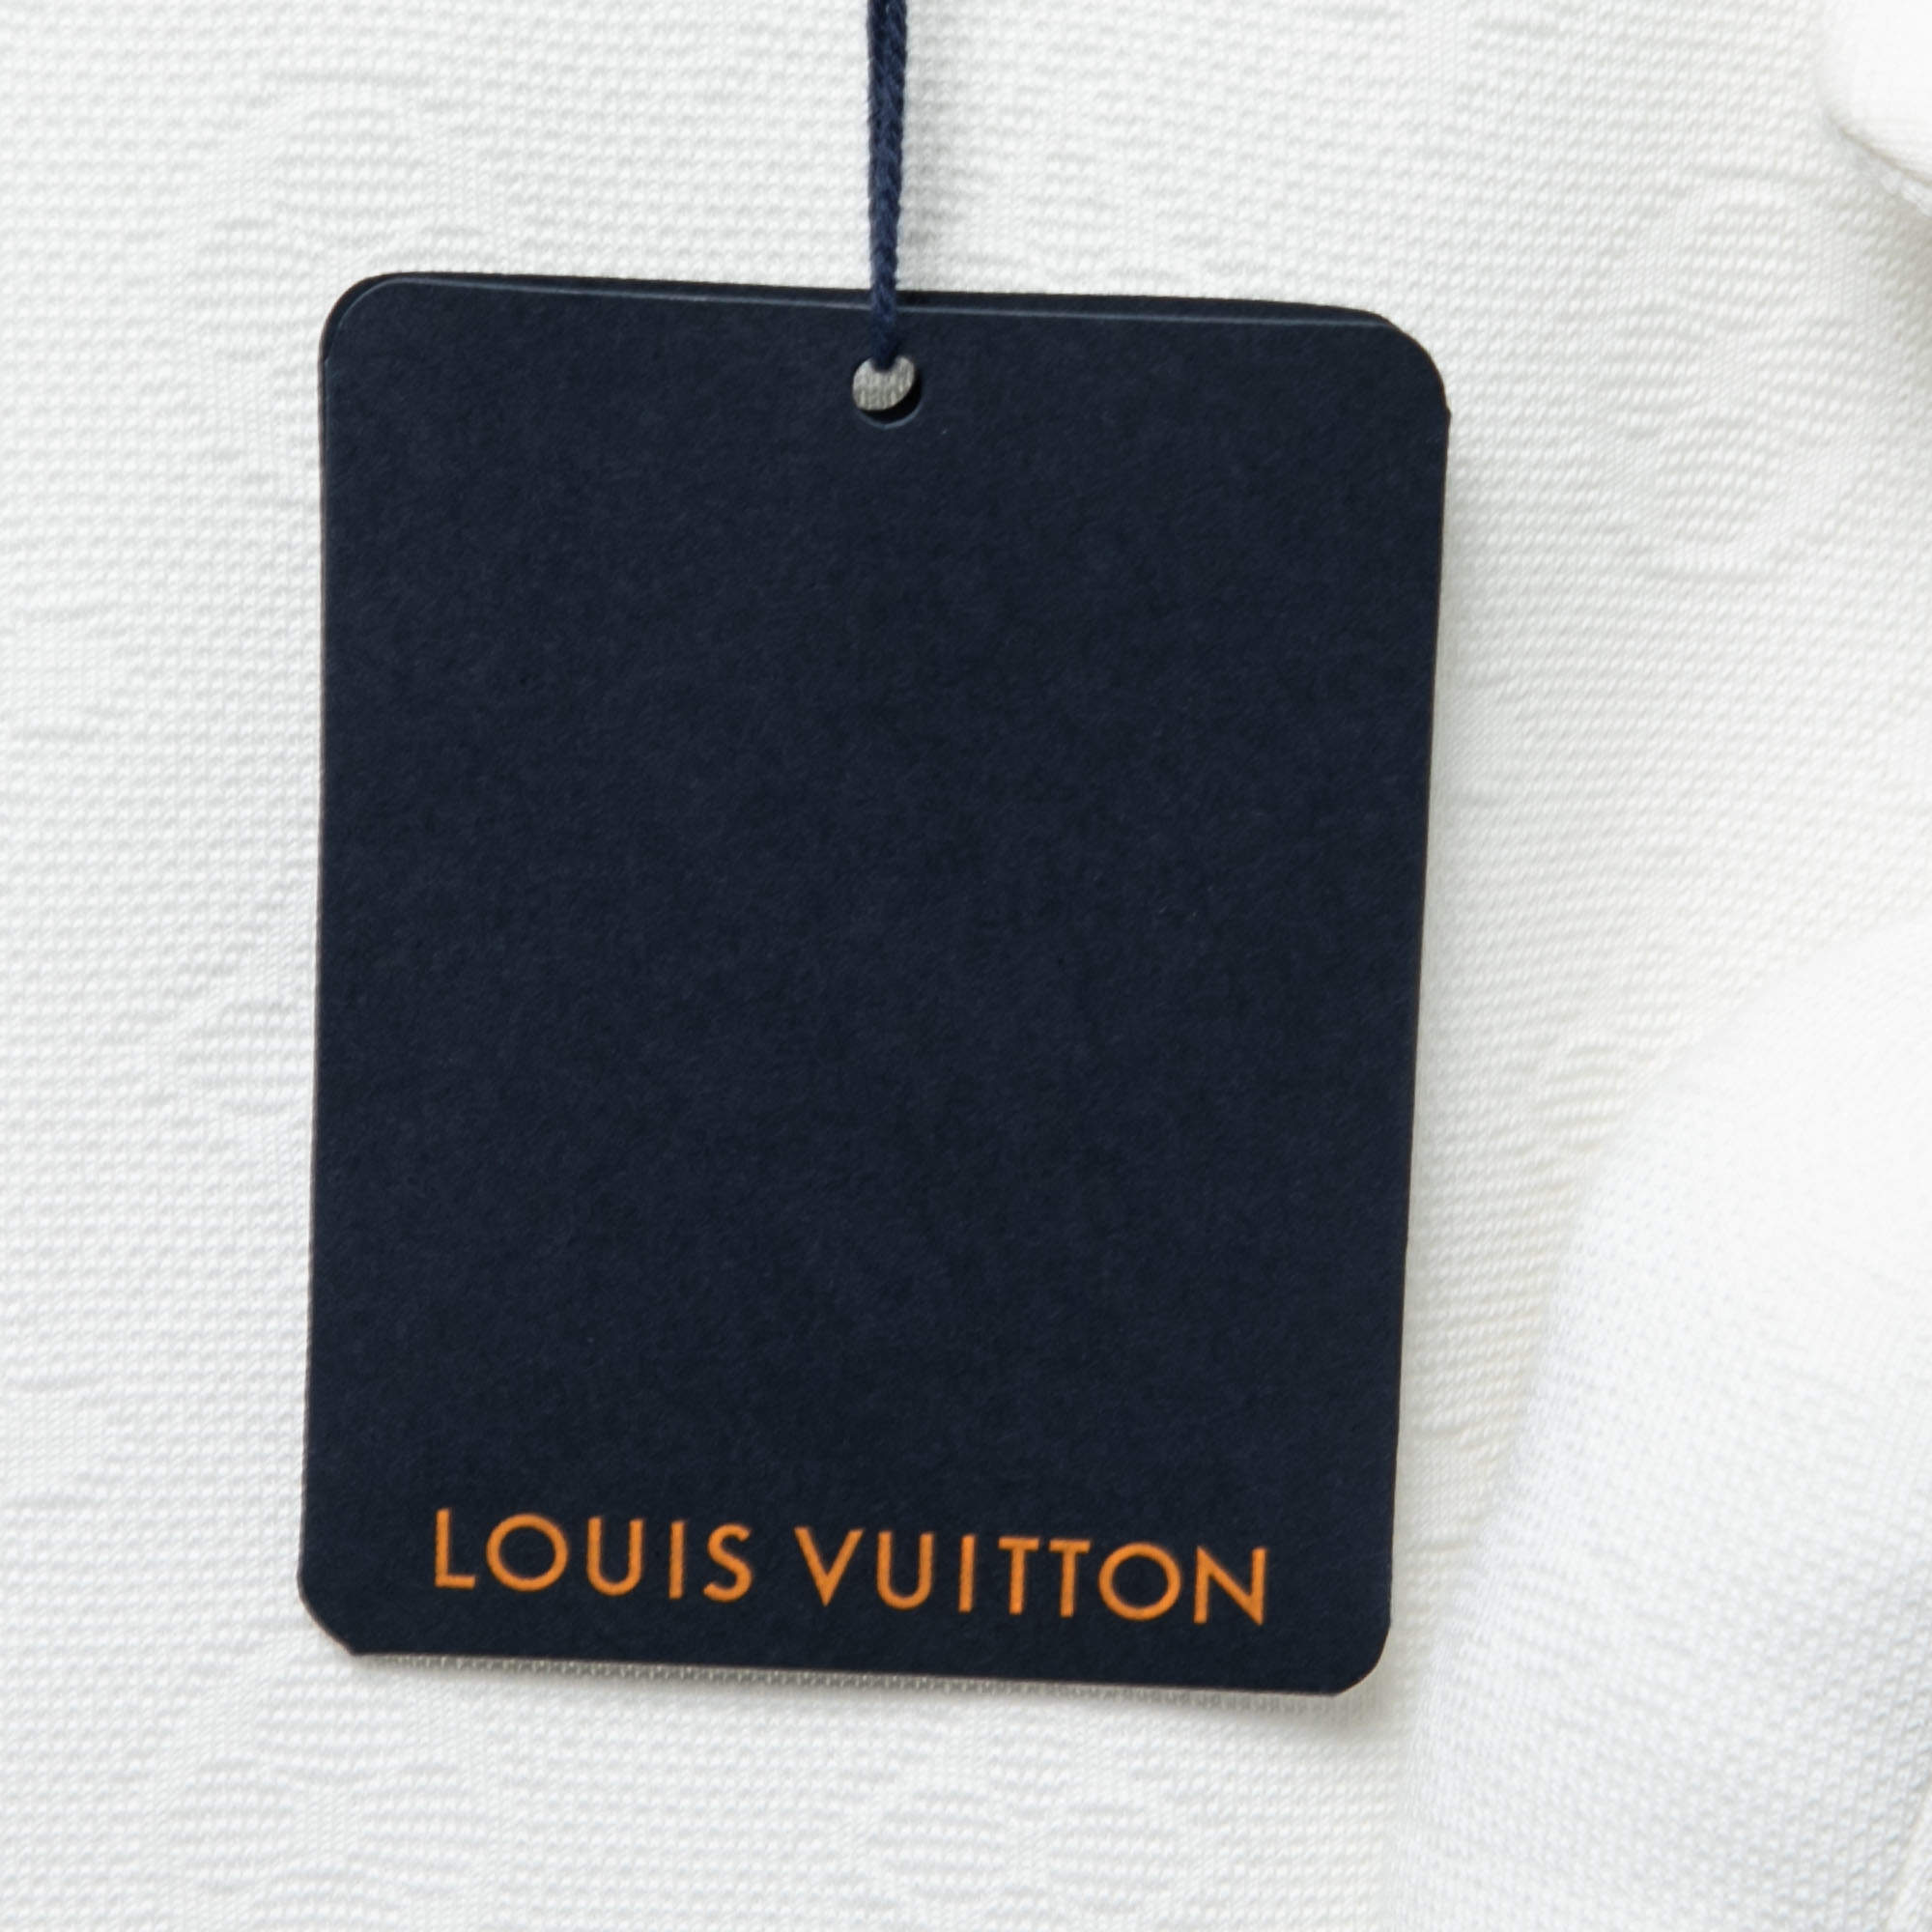 Louis Vuitton 3D Monkey Tee